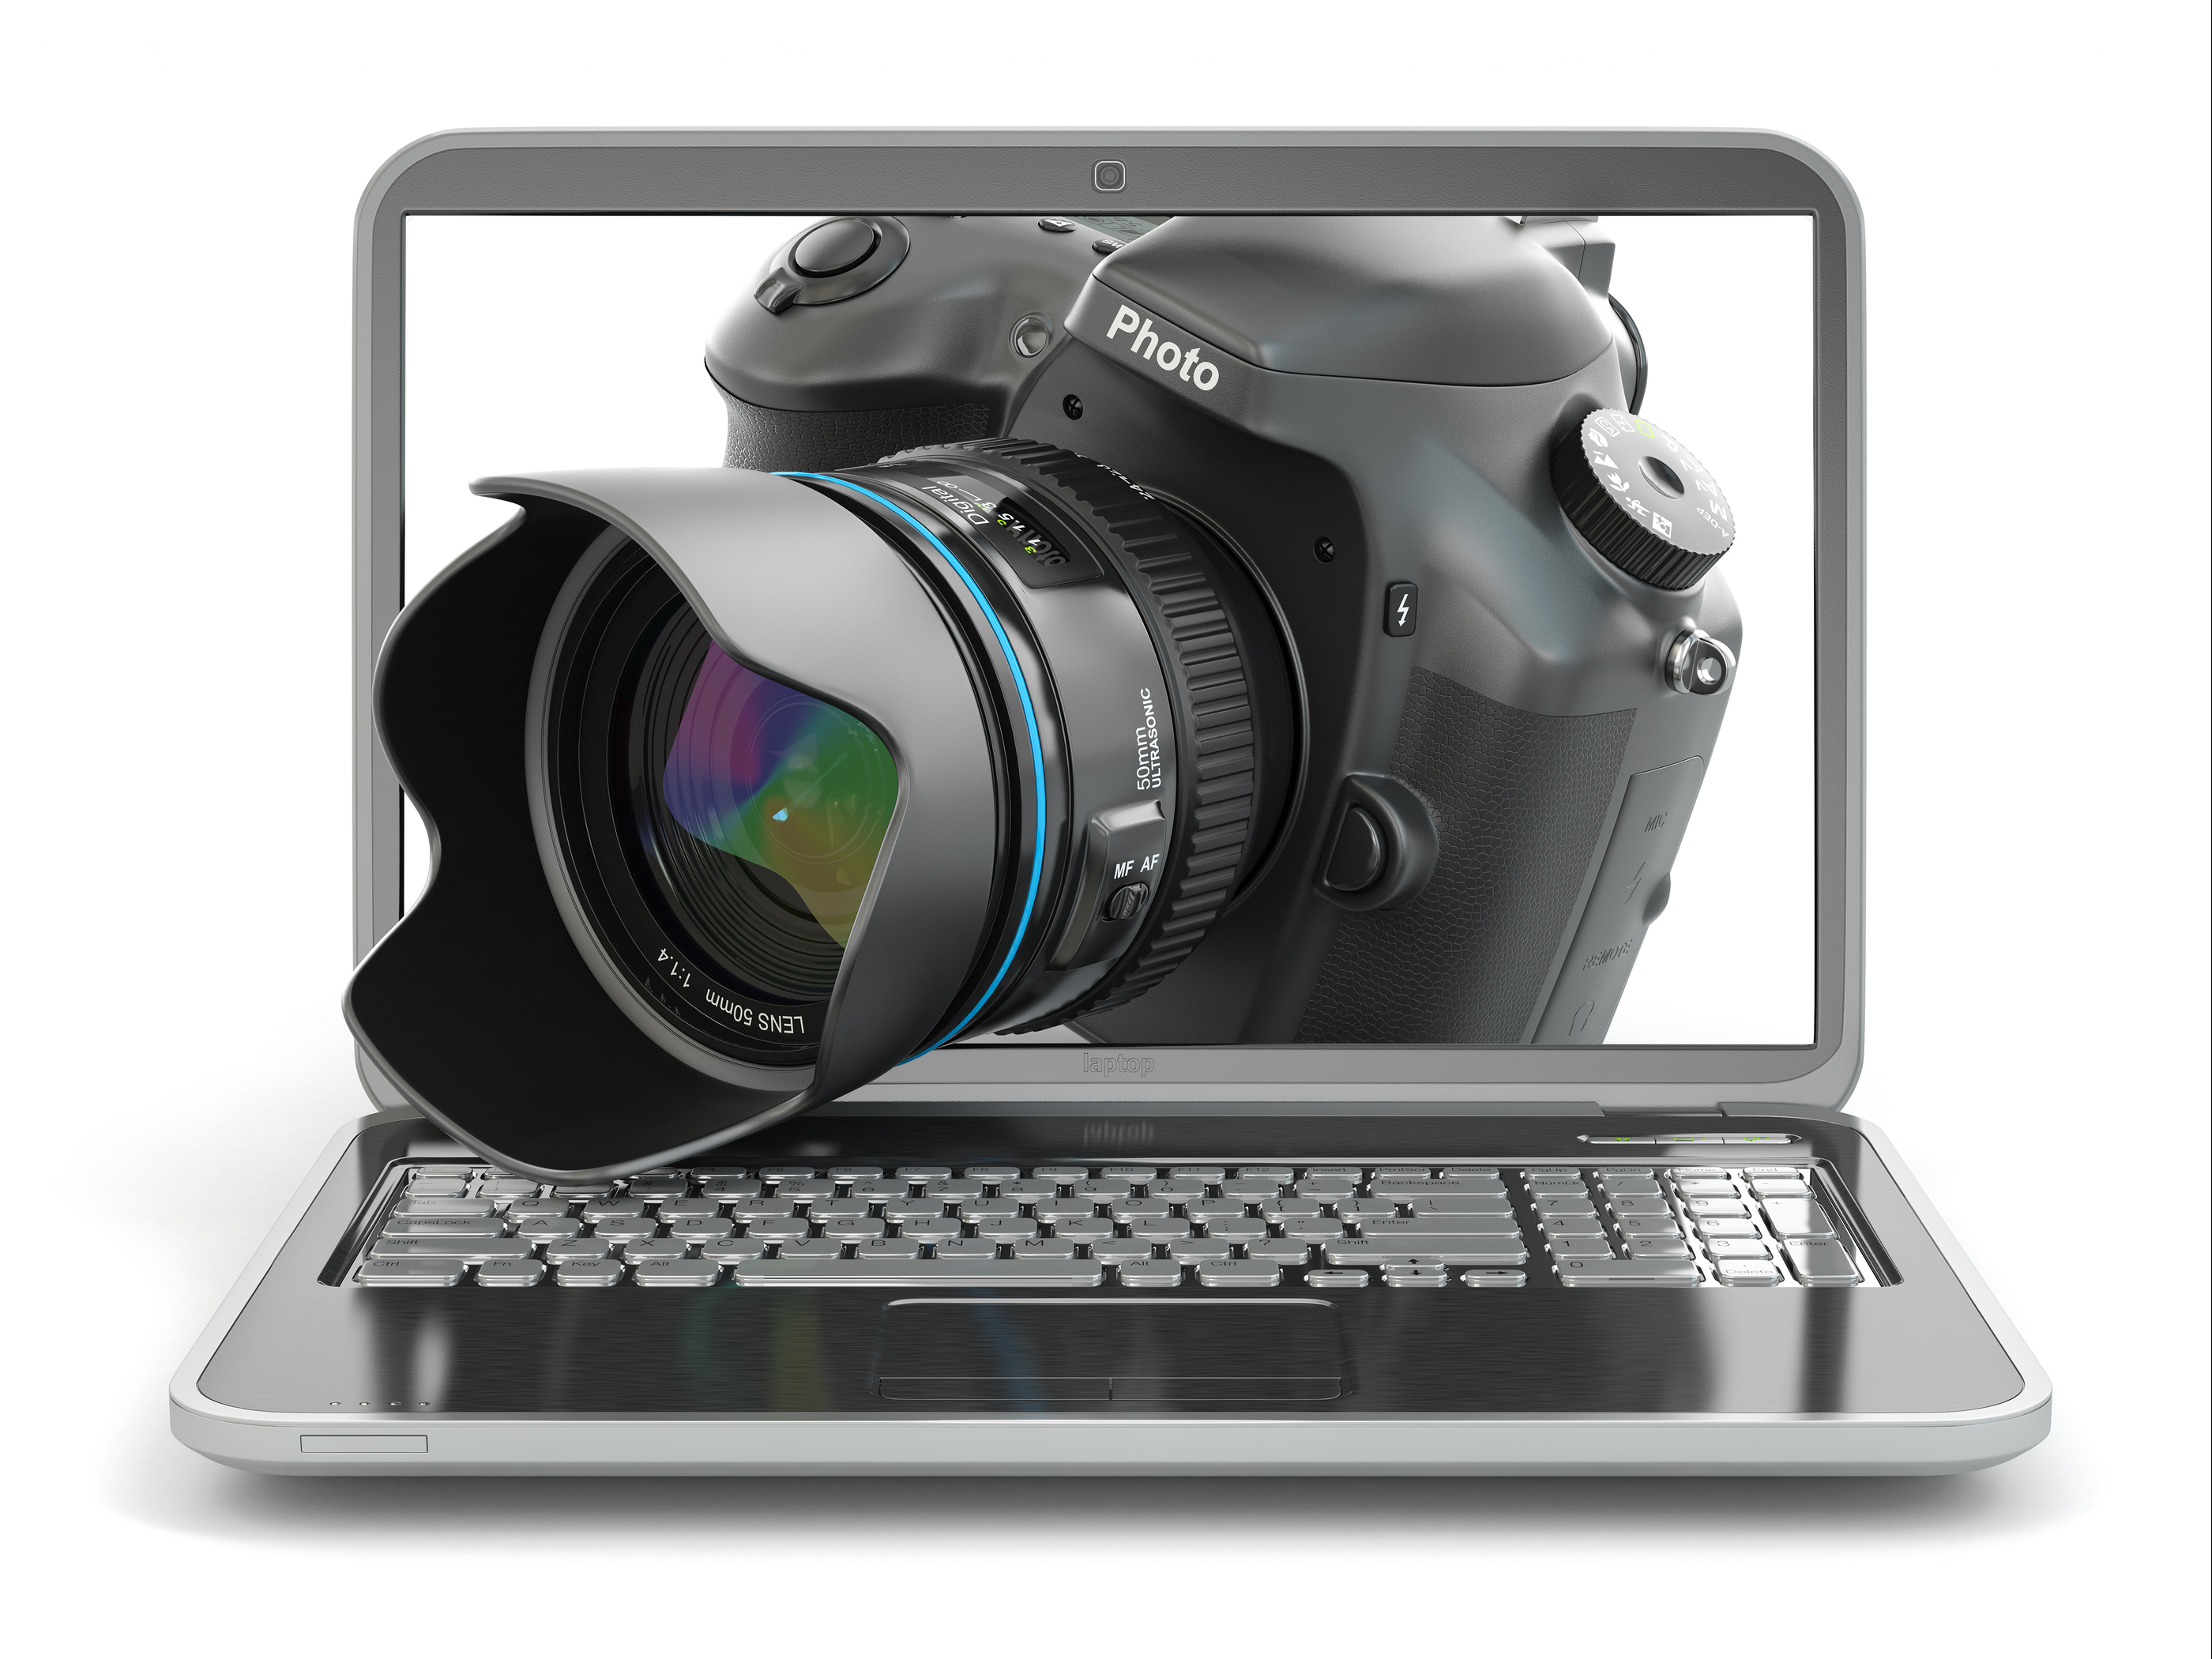 Digital photo camera and laptop. Journalist or traveler equipm